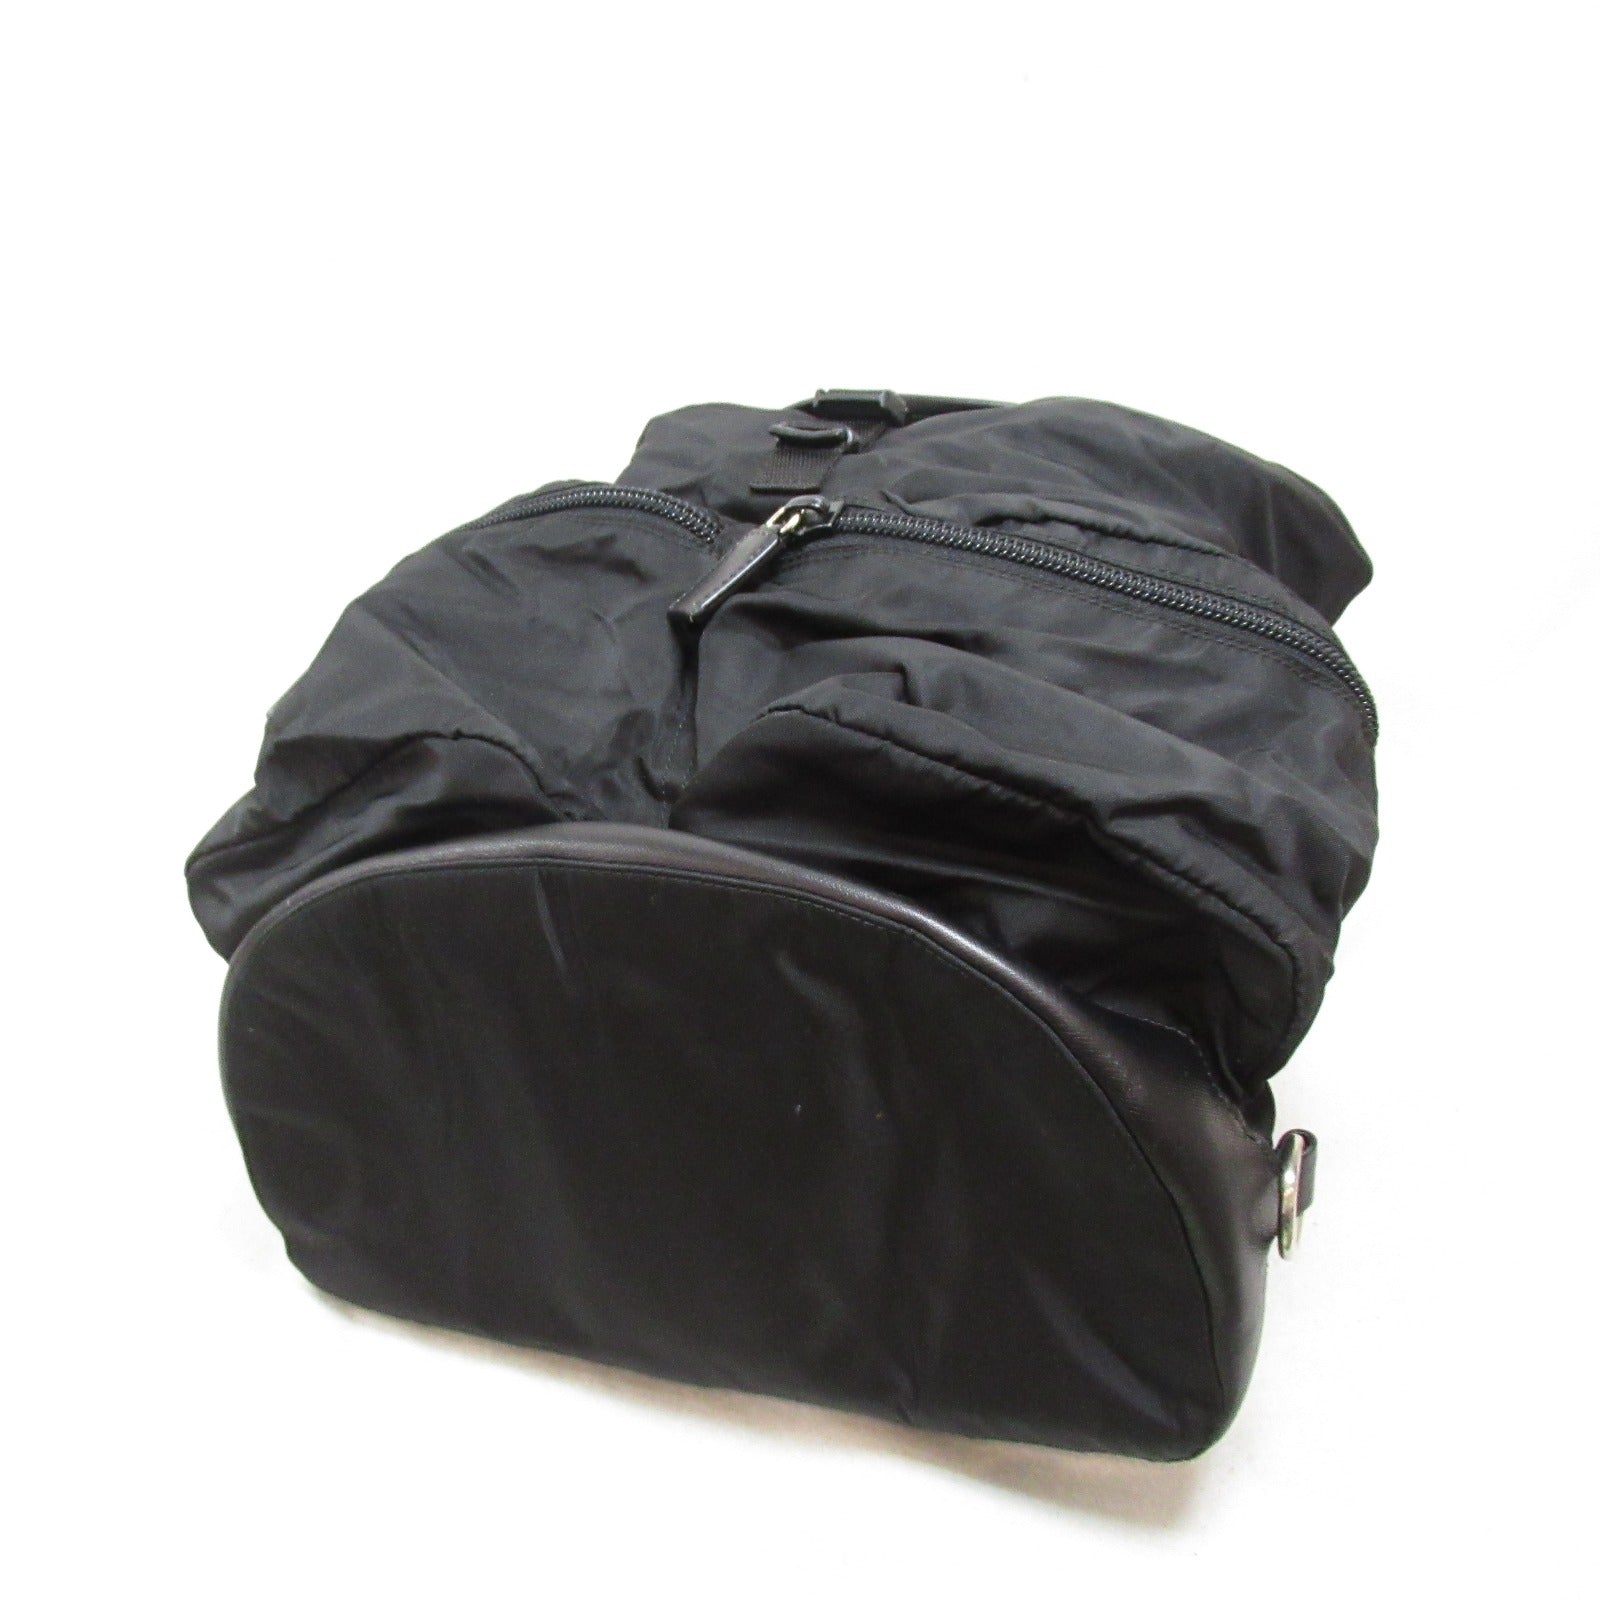 PRADA PRADA Rucksack Rucksack Backpack Bag Nylon   Black Rucksack OFF